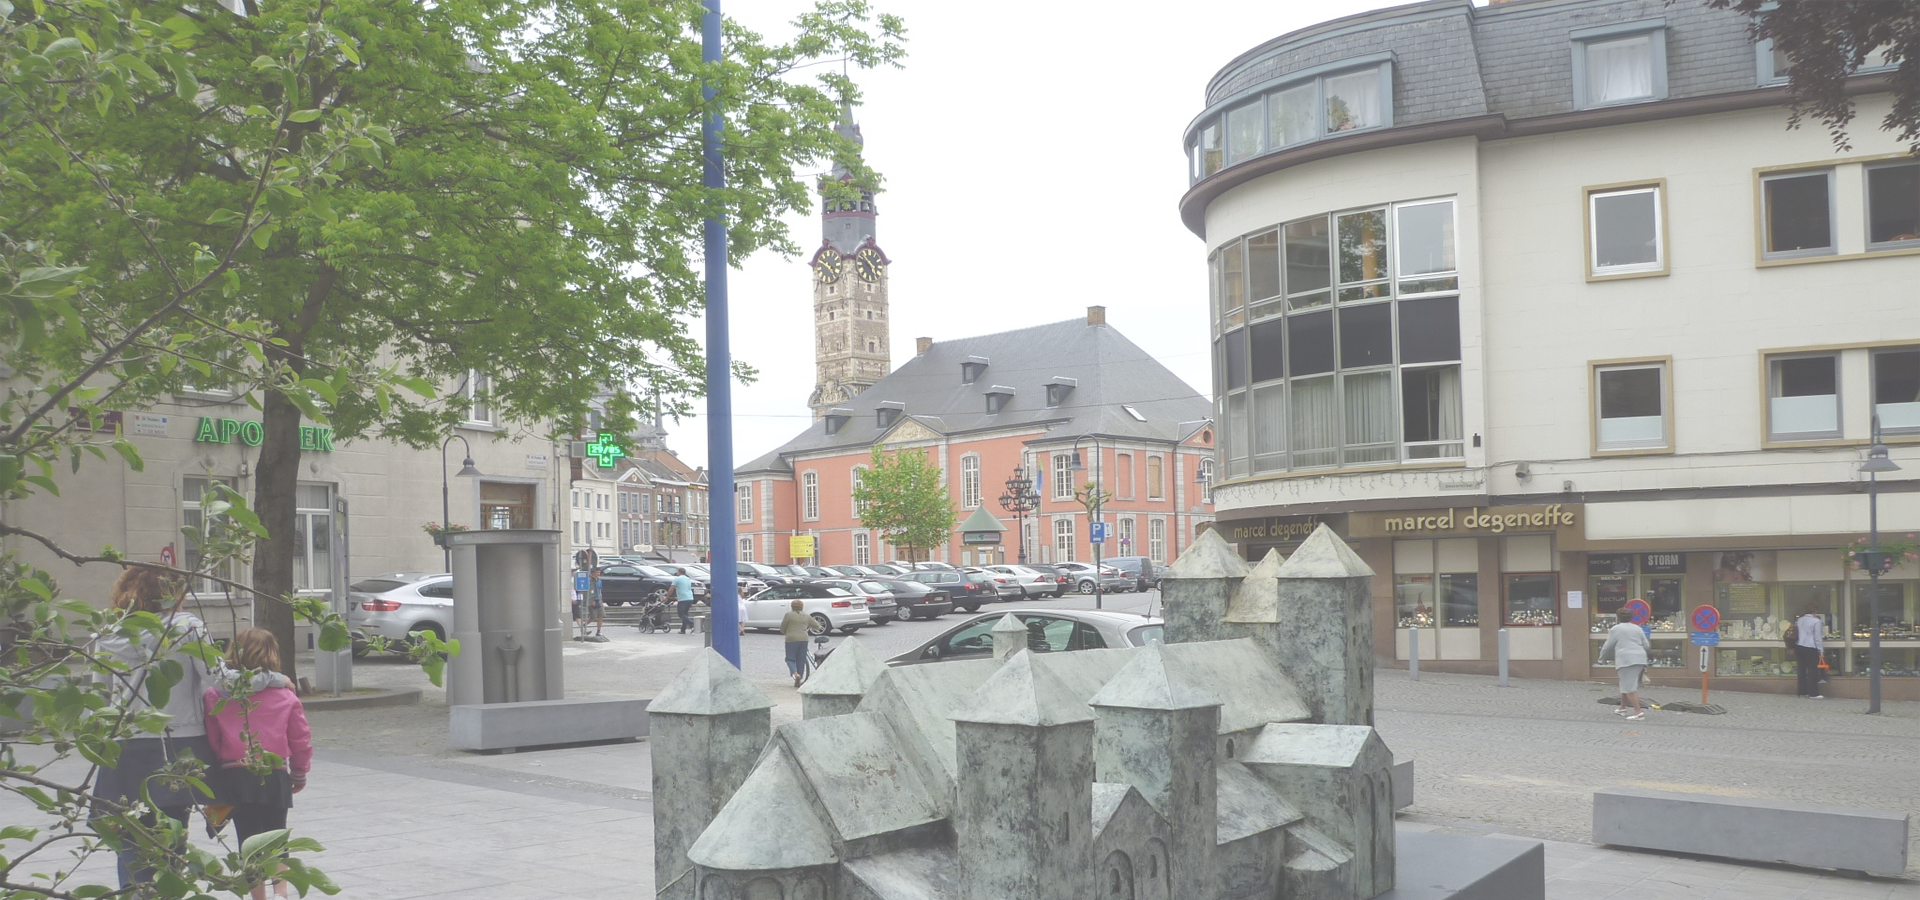 <b>Sint-Truiden, Limburg Province, Flanders, Belgium</b>